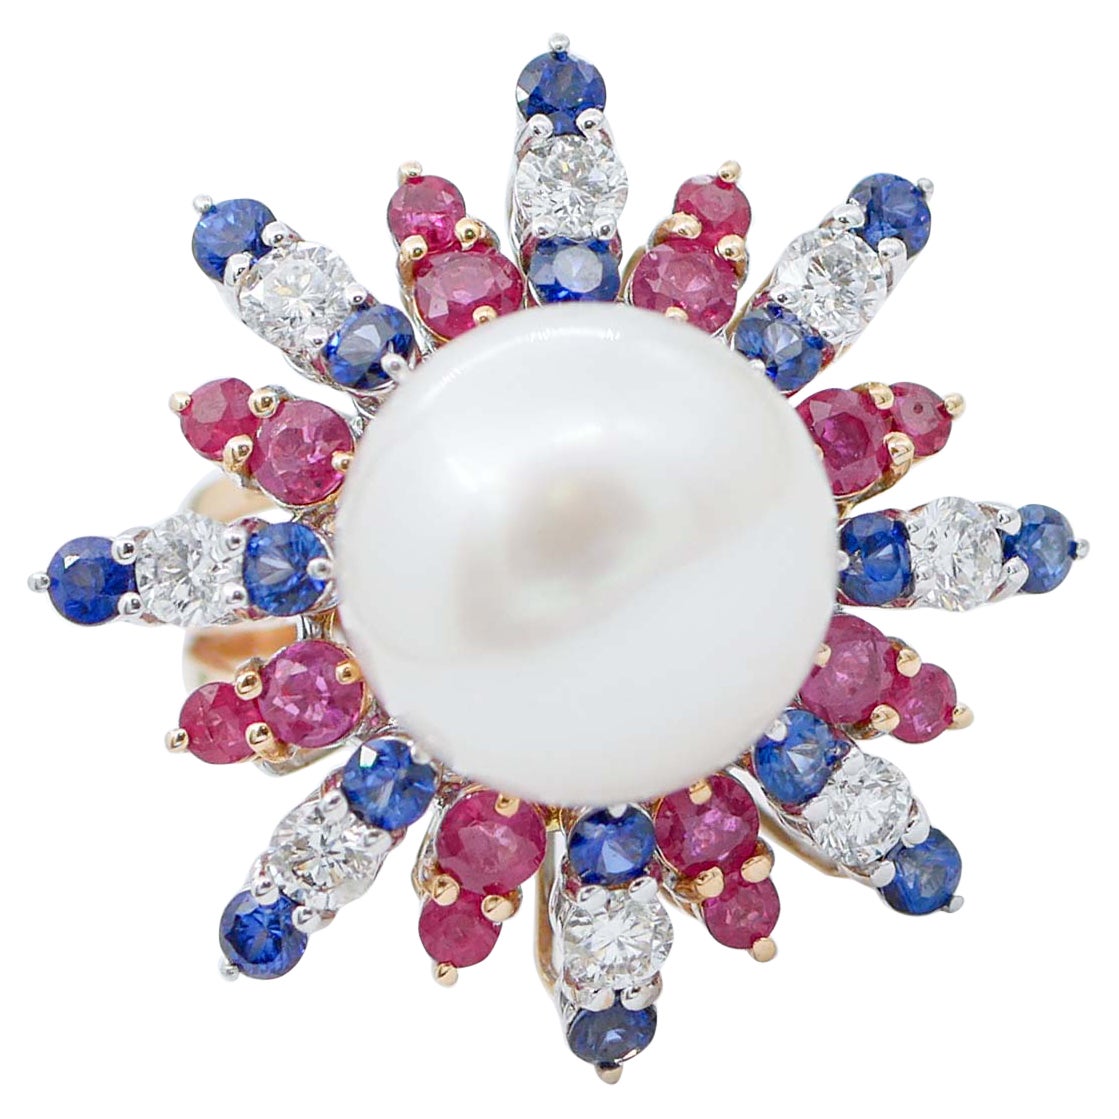 South-Sea Pearl, Rubies, Sapphires, Diamonds, 14 Karat Rose and White Gold Ring